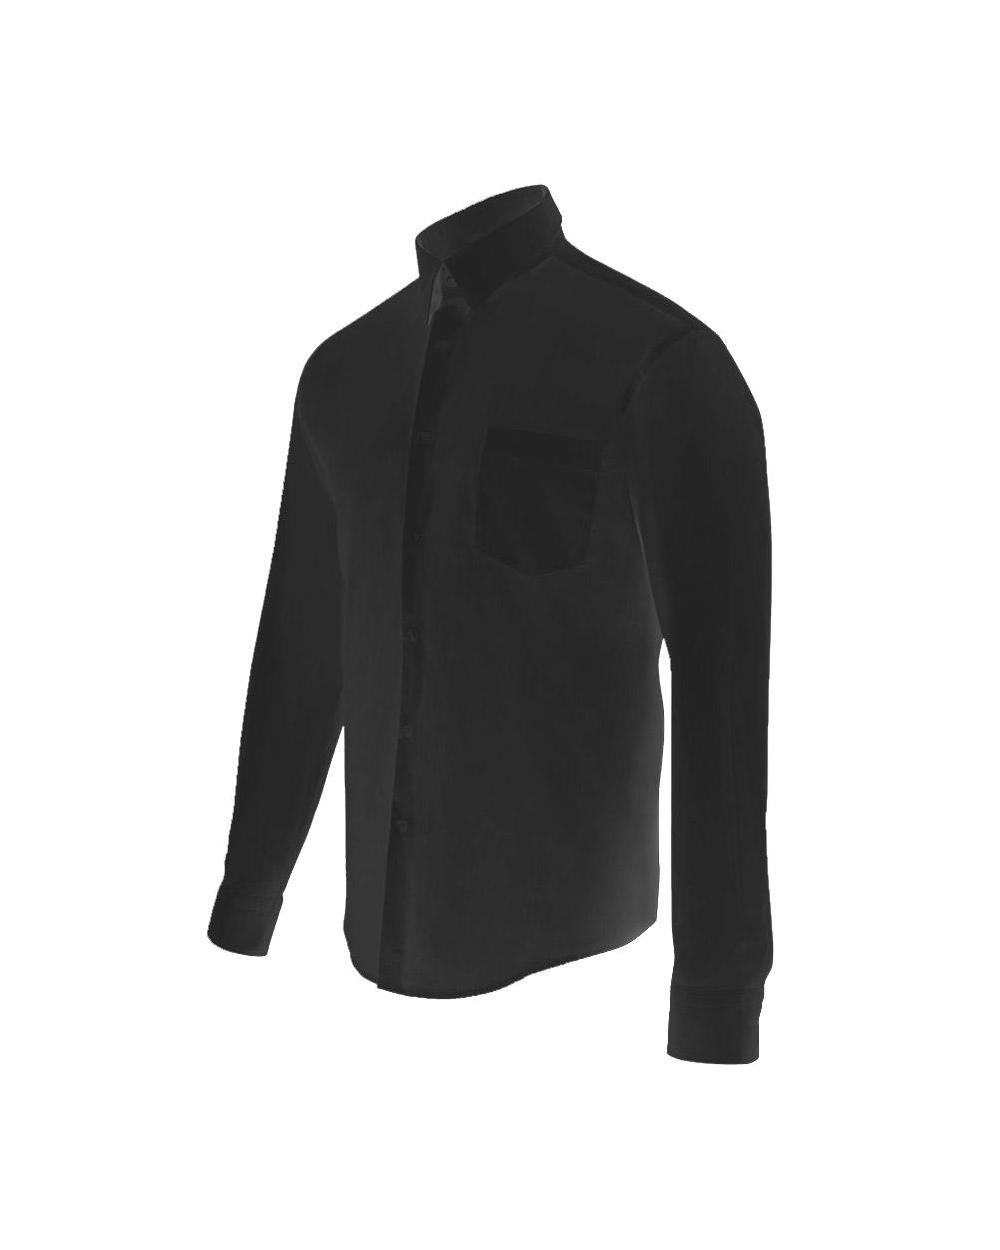 Comprar Camisa stretch hombre serie 405003 online barato Negro